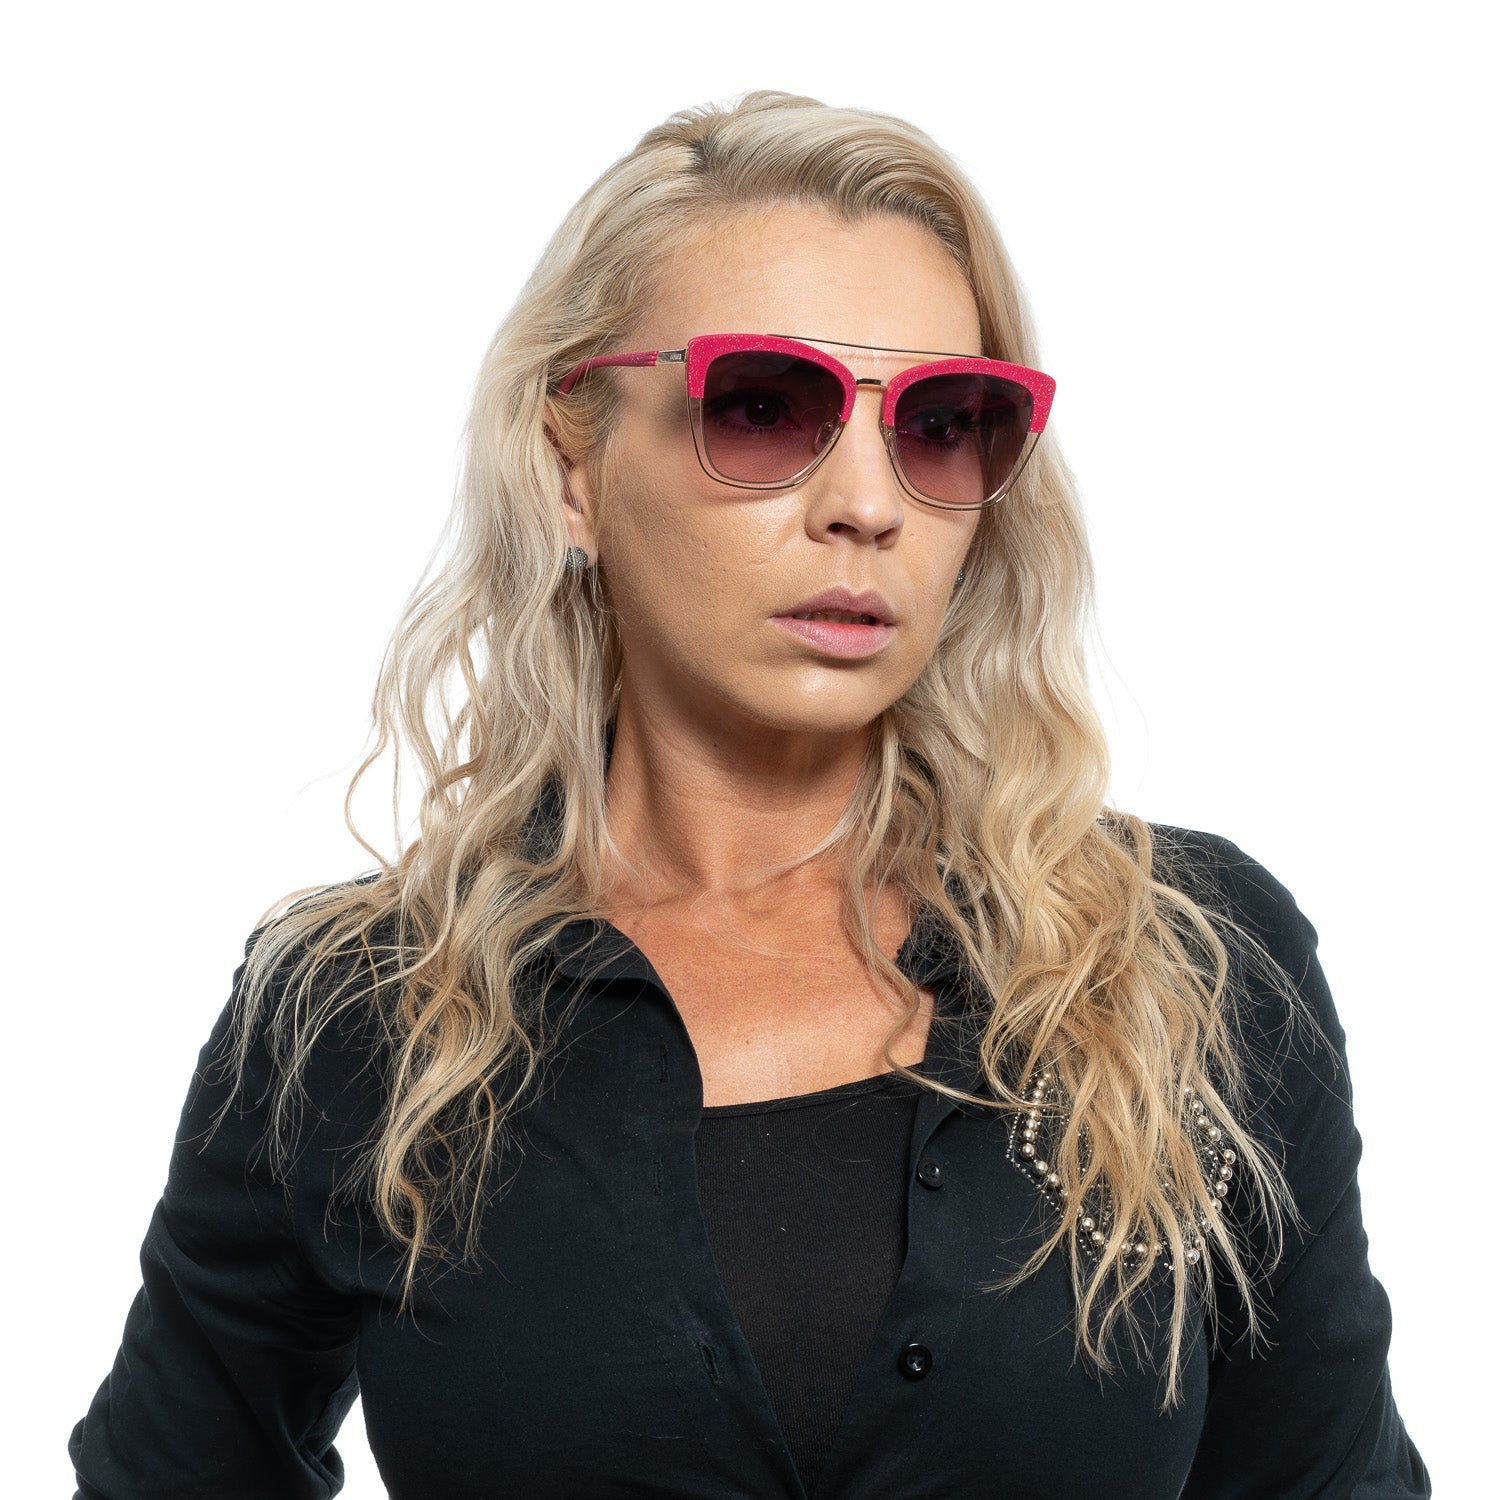 Police Pink Sunglasses for Woman - Fizigo